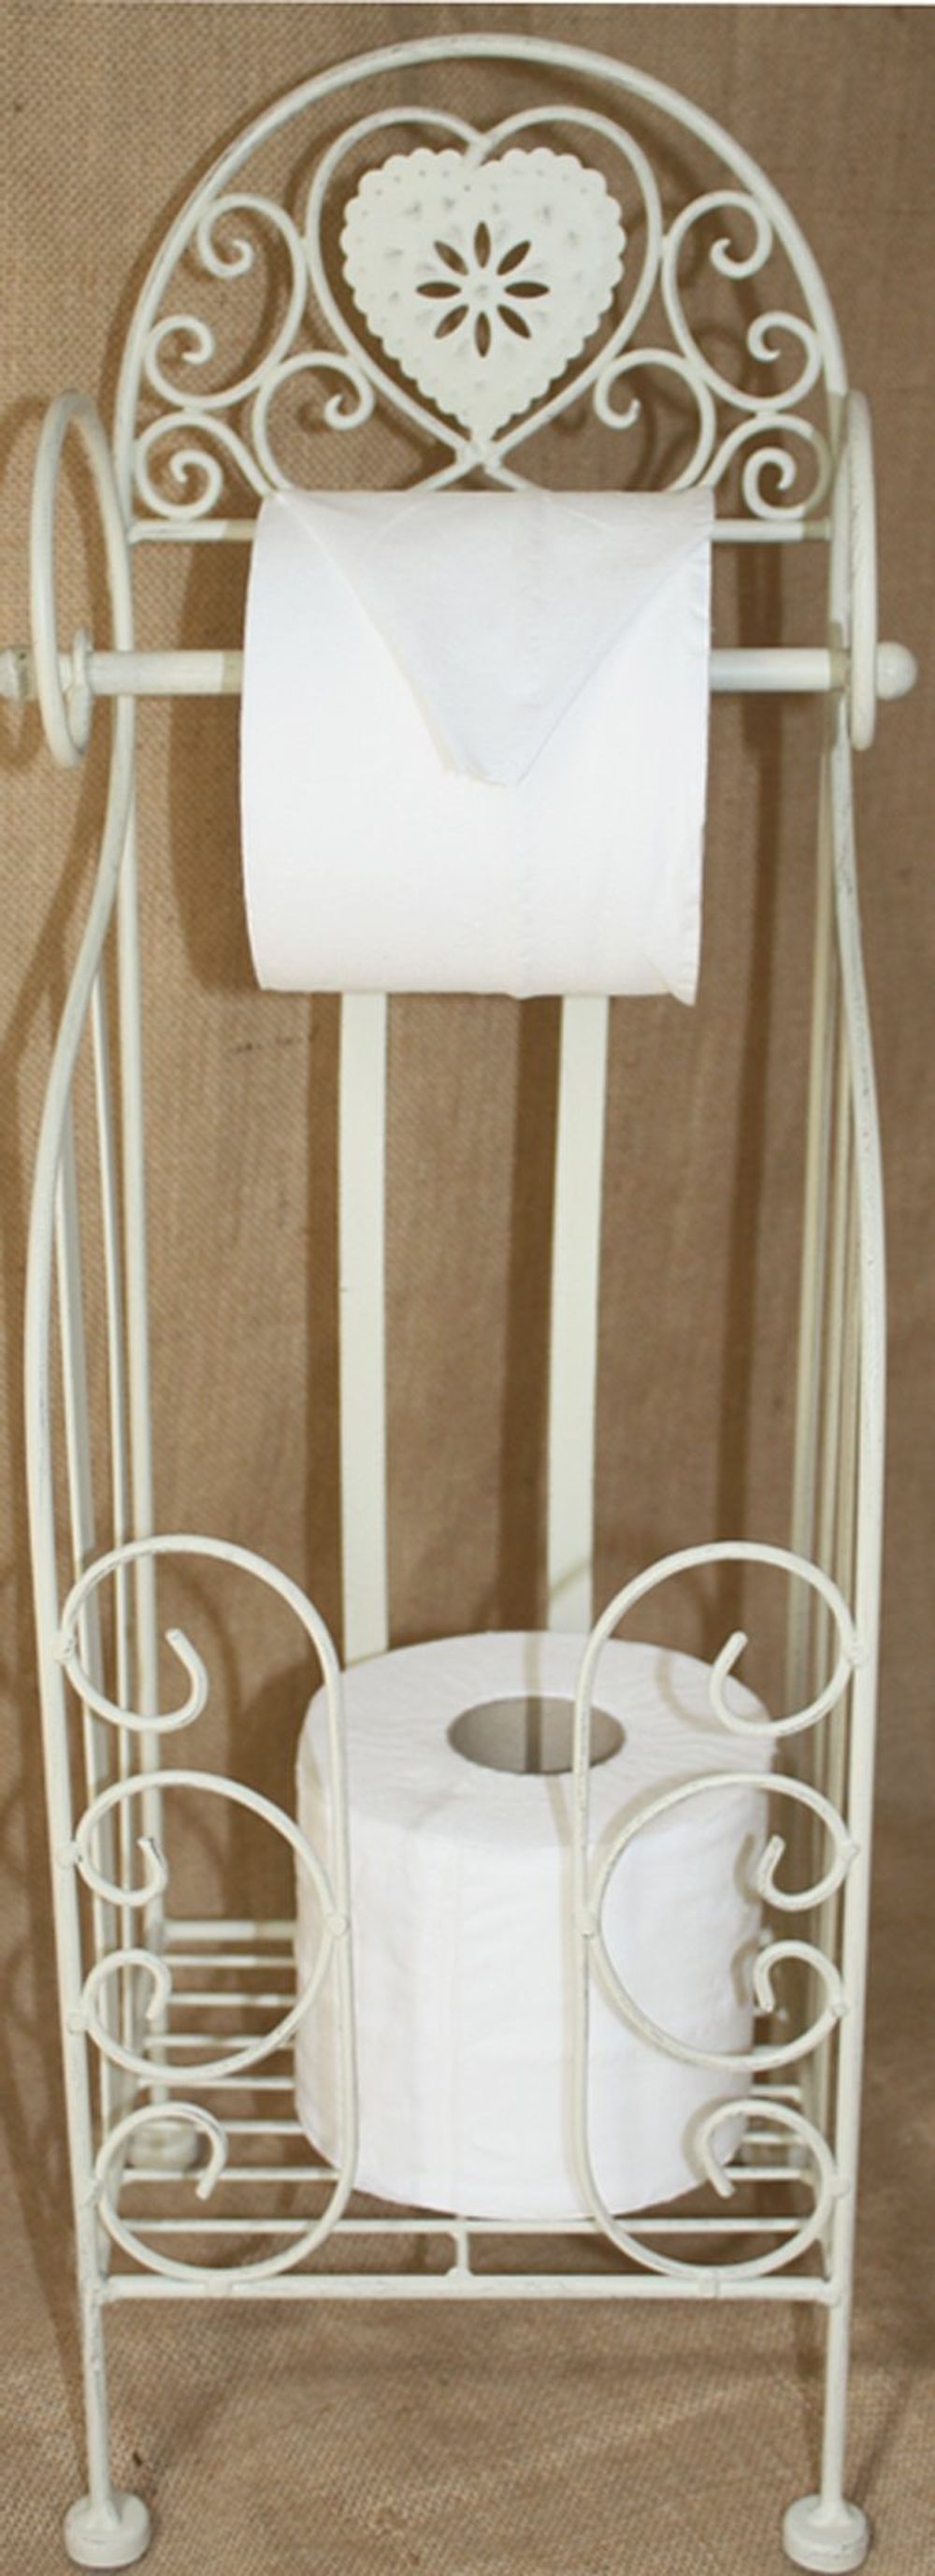 Cream Heart Toilet Roll Holder With Storage